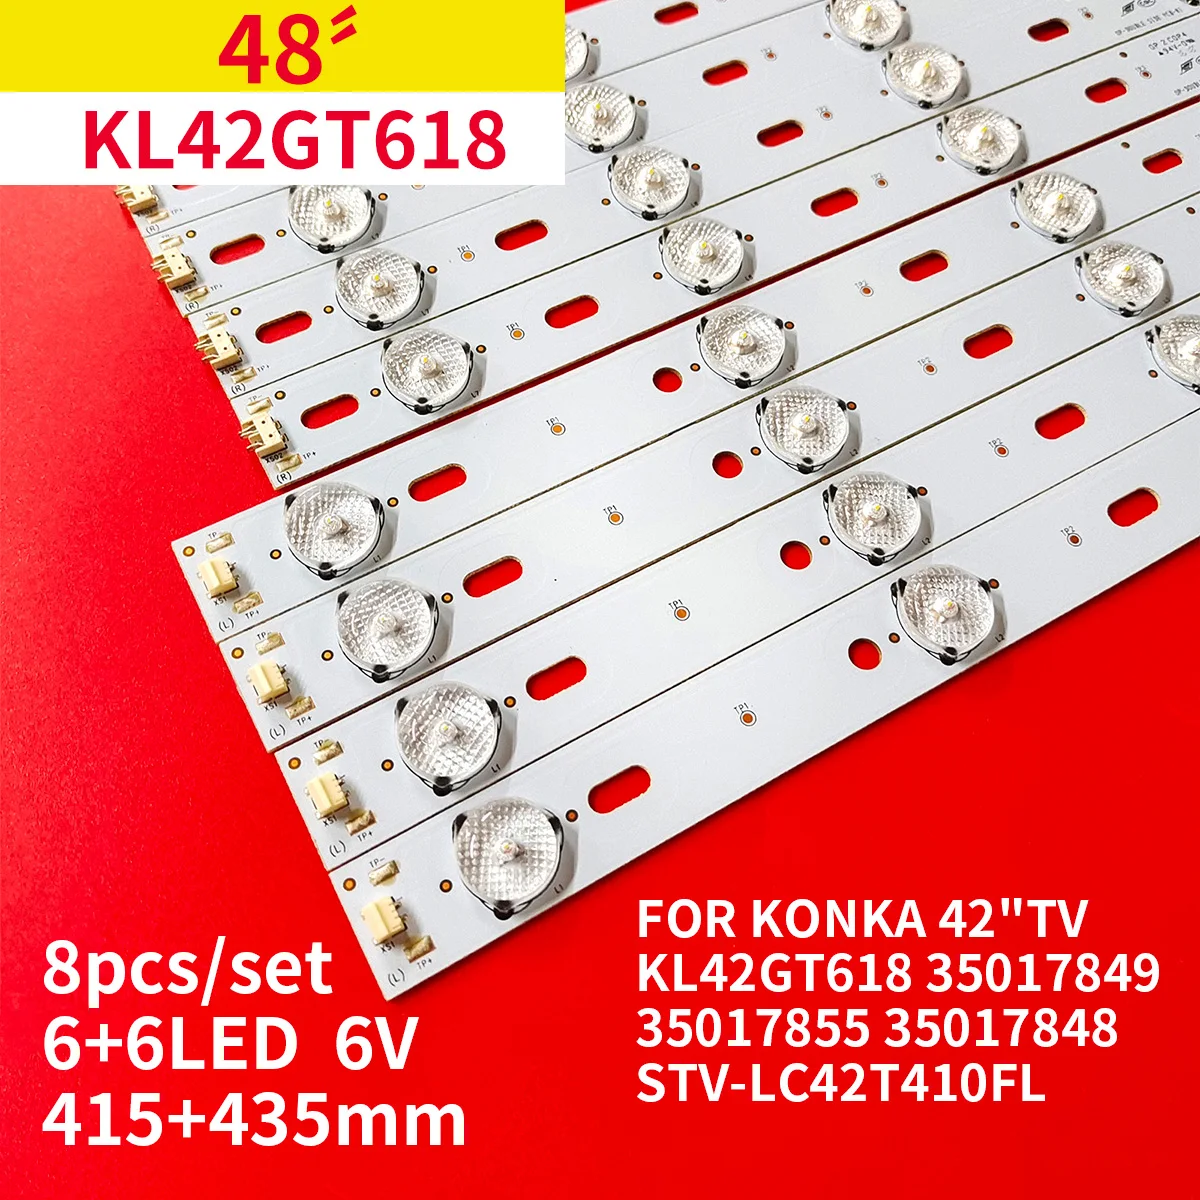 4set-kl42gt618-35017856-kl42gt618-konka-led-bande-35017849-35017848-led-retro-Eclairage-bande-pour-sustore-a-stv-lc42t410fl-dns-k42a619